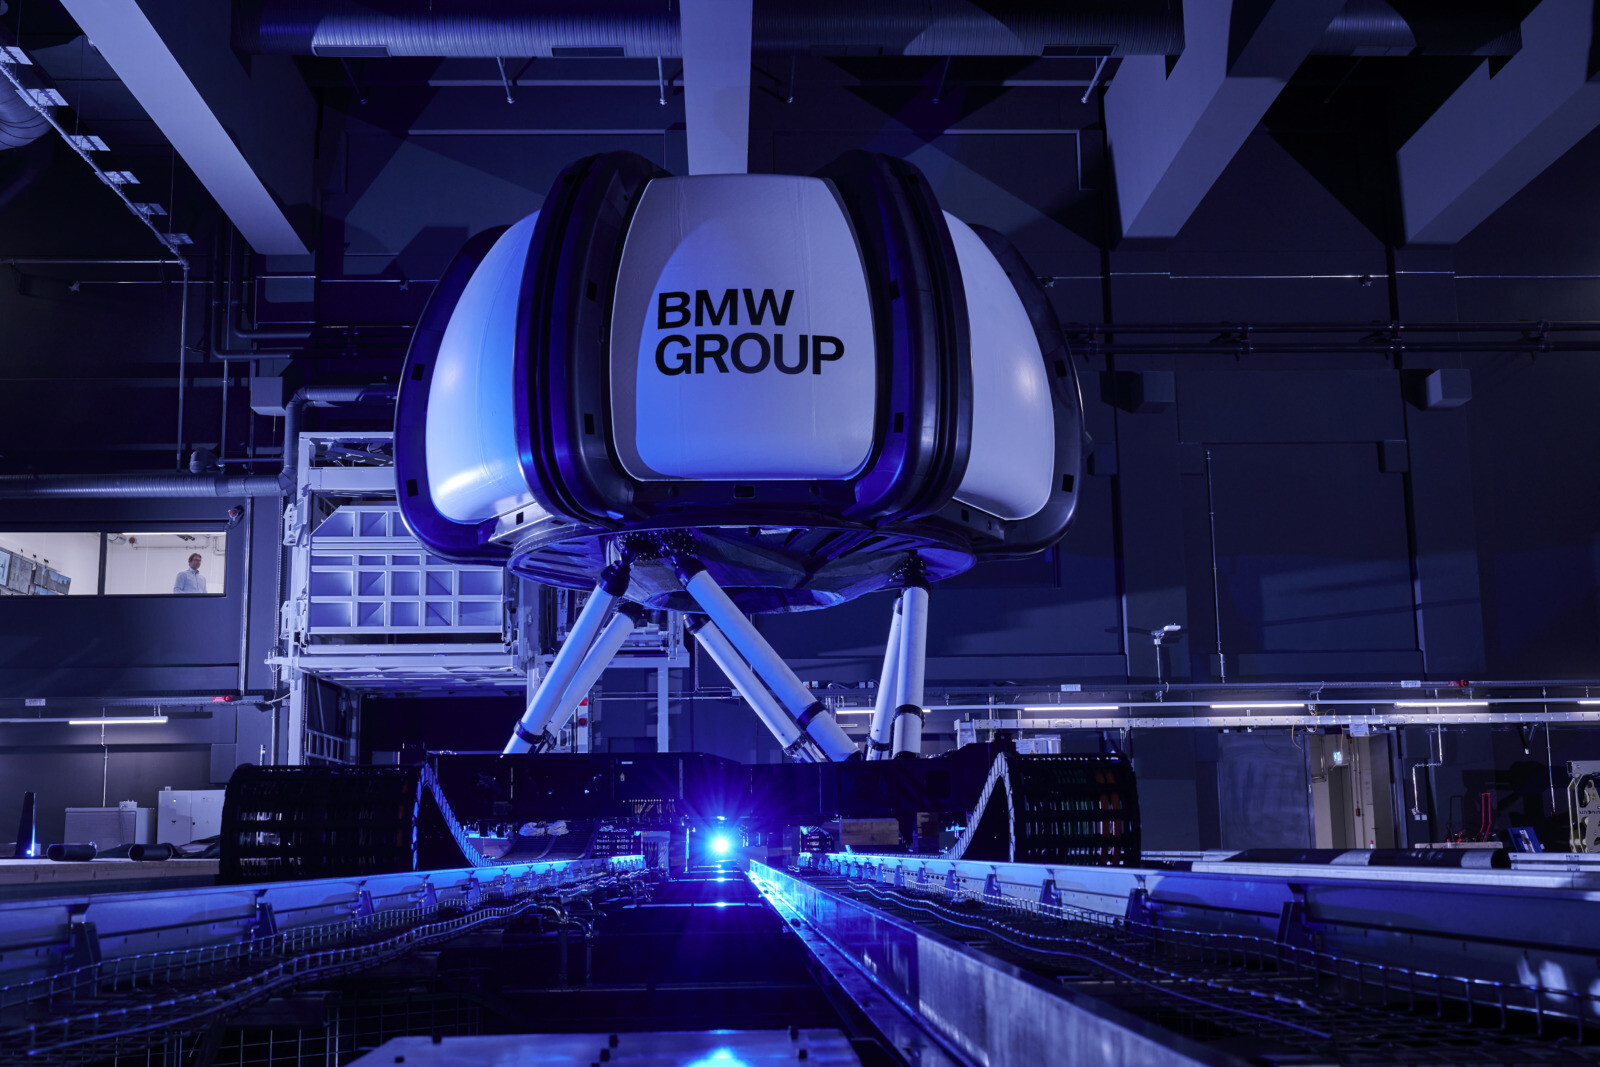 BMWが超大規模シミュレーションセンターを新設！ 1日最大100人のテスターが働く先進設備を公開